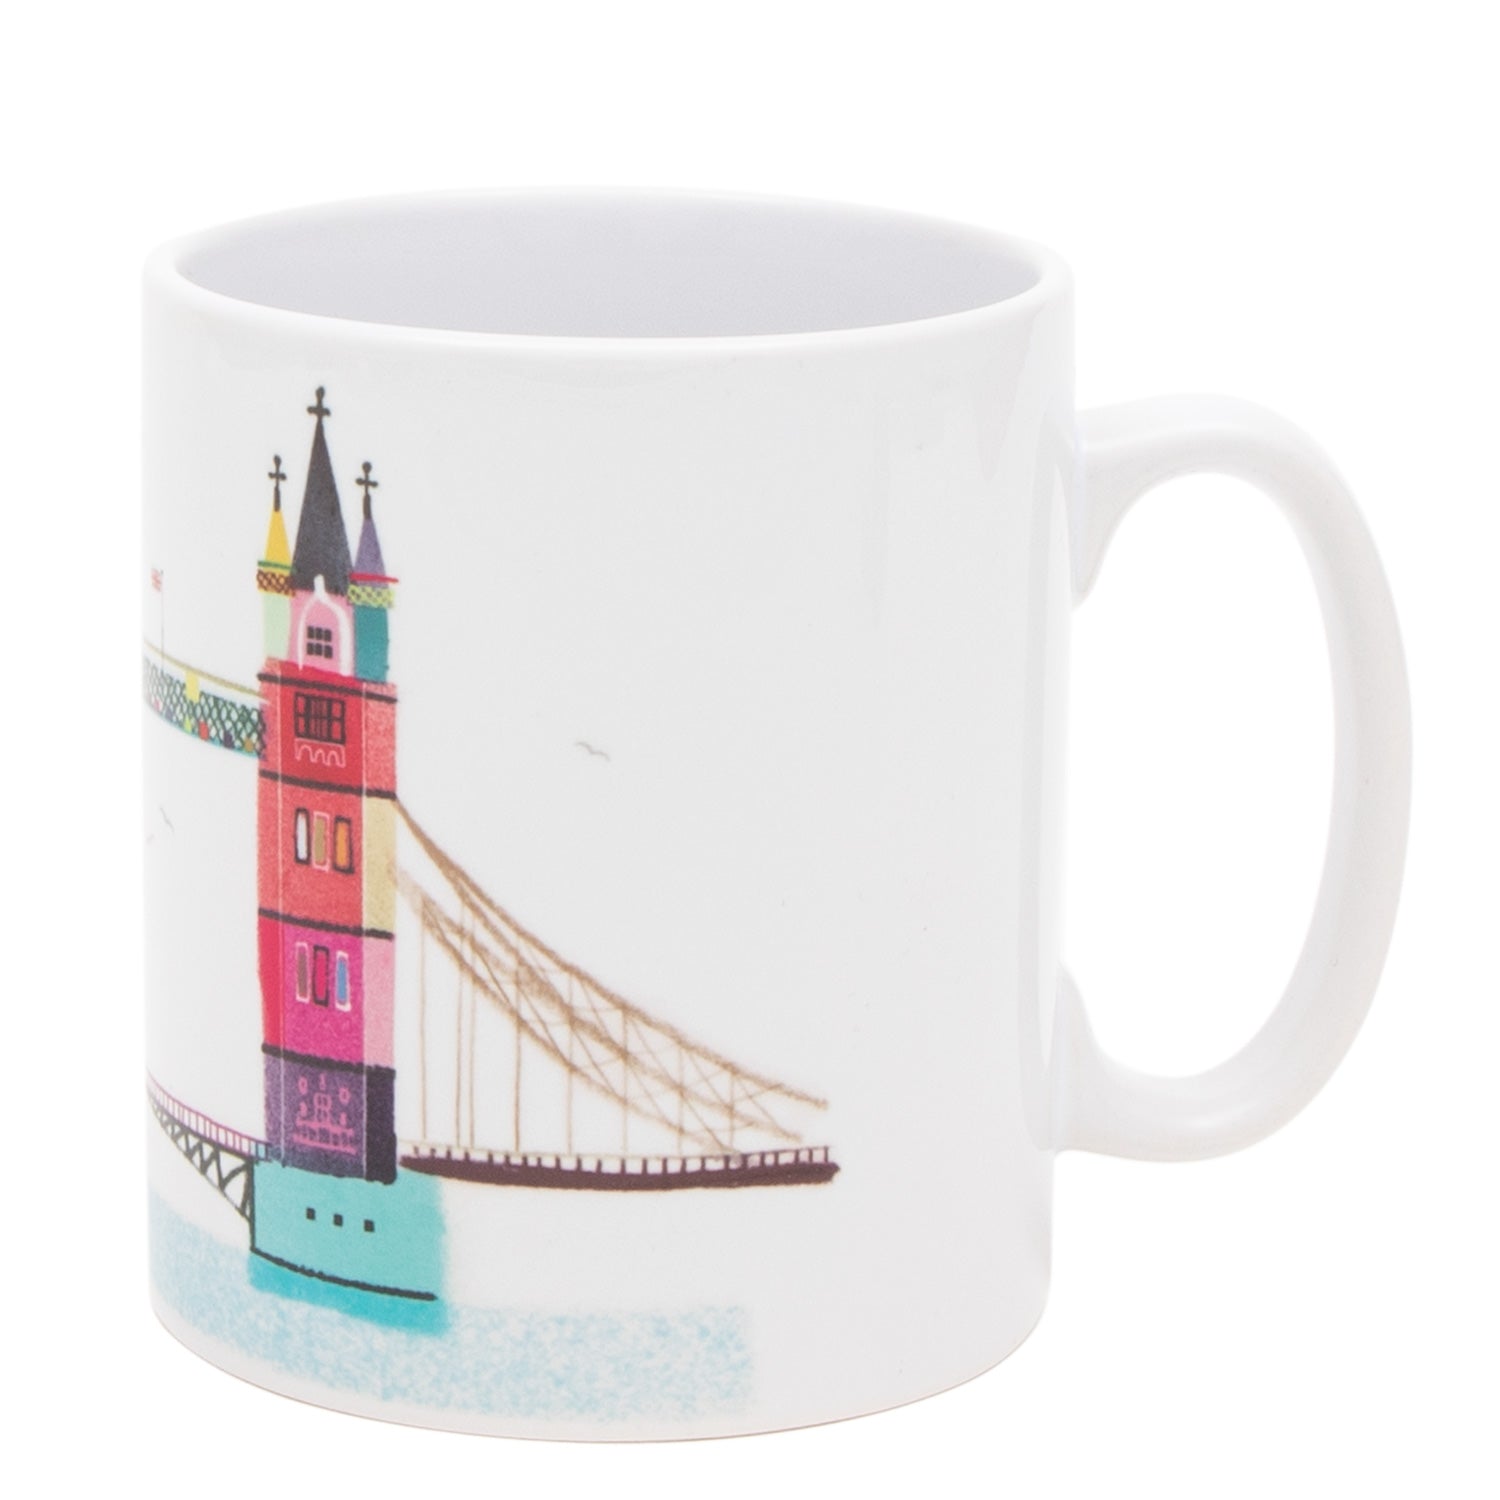 I Drew This - Tower Bridge Mug 2